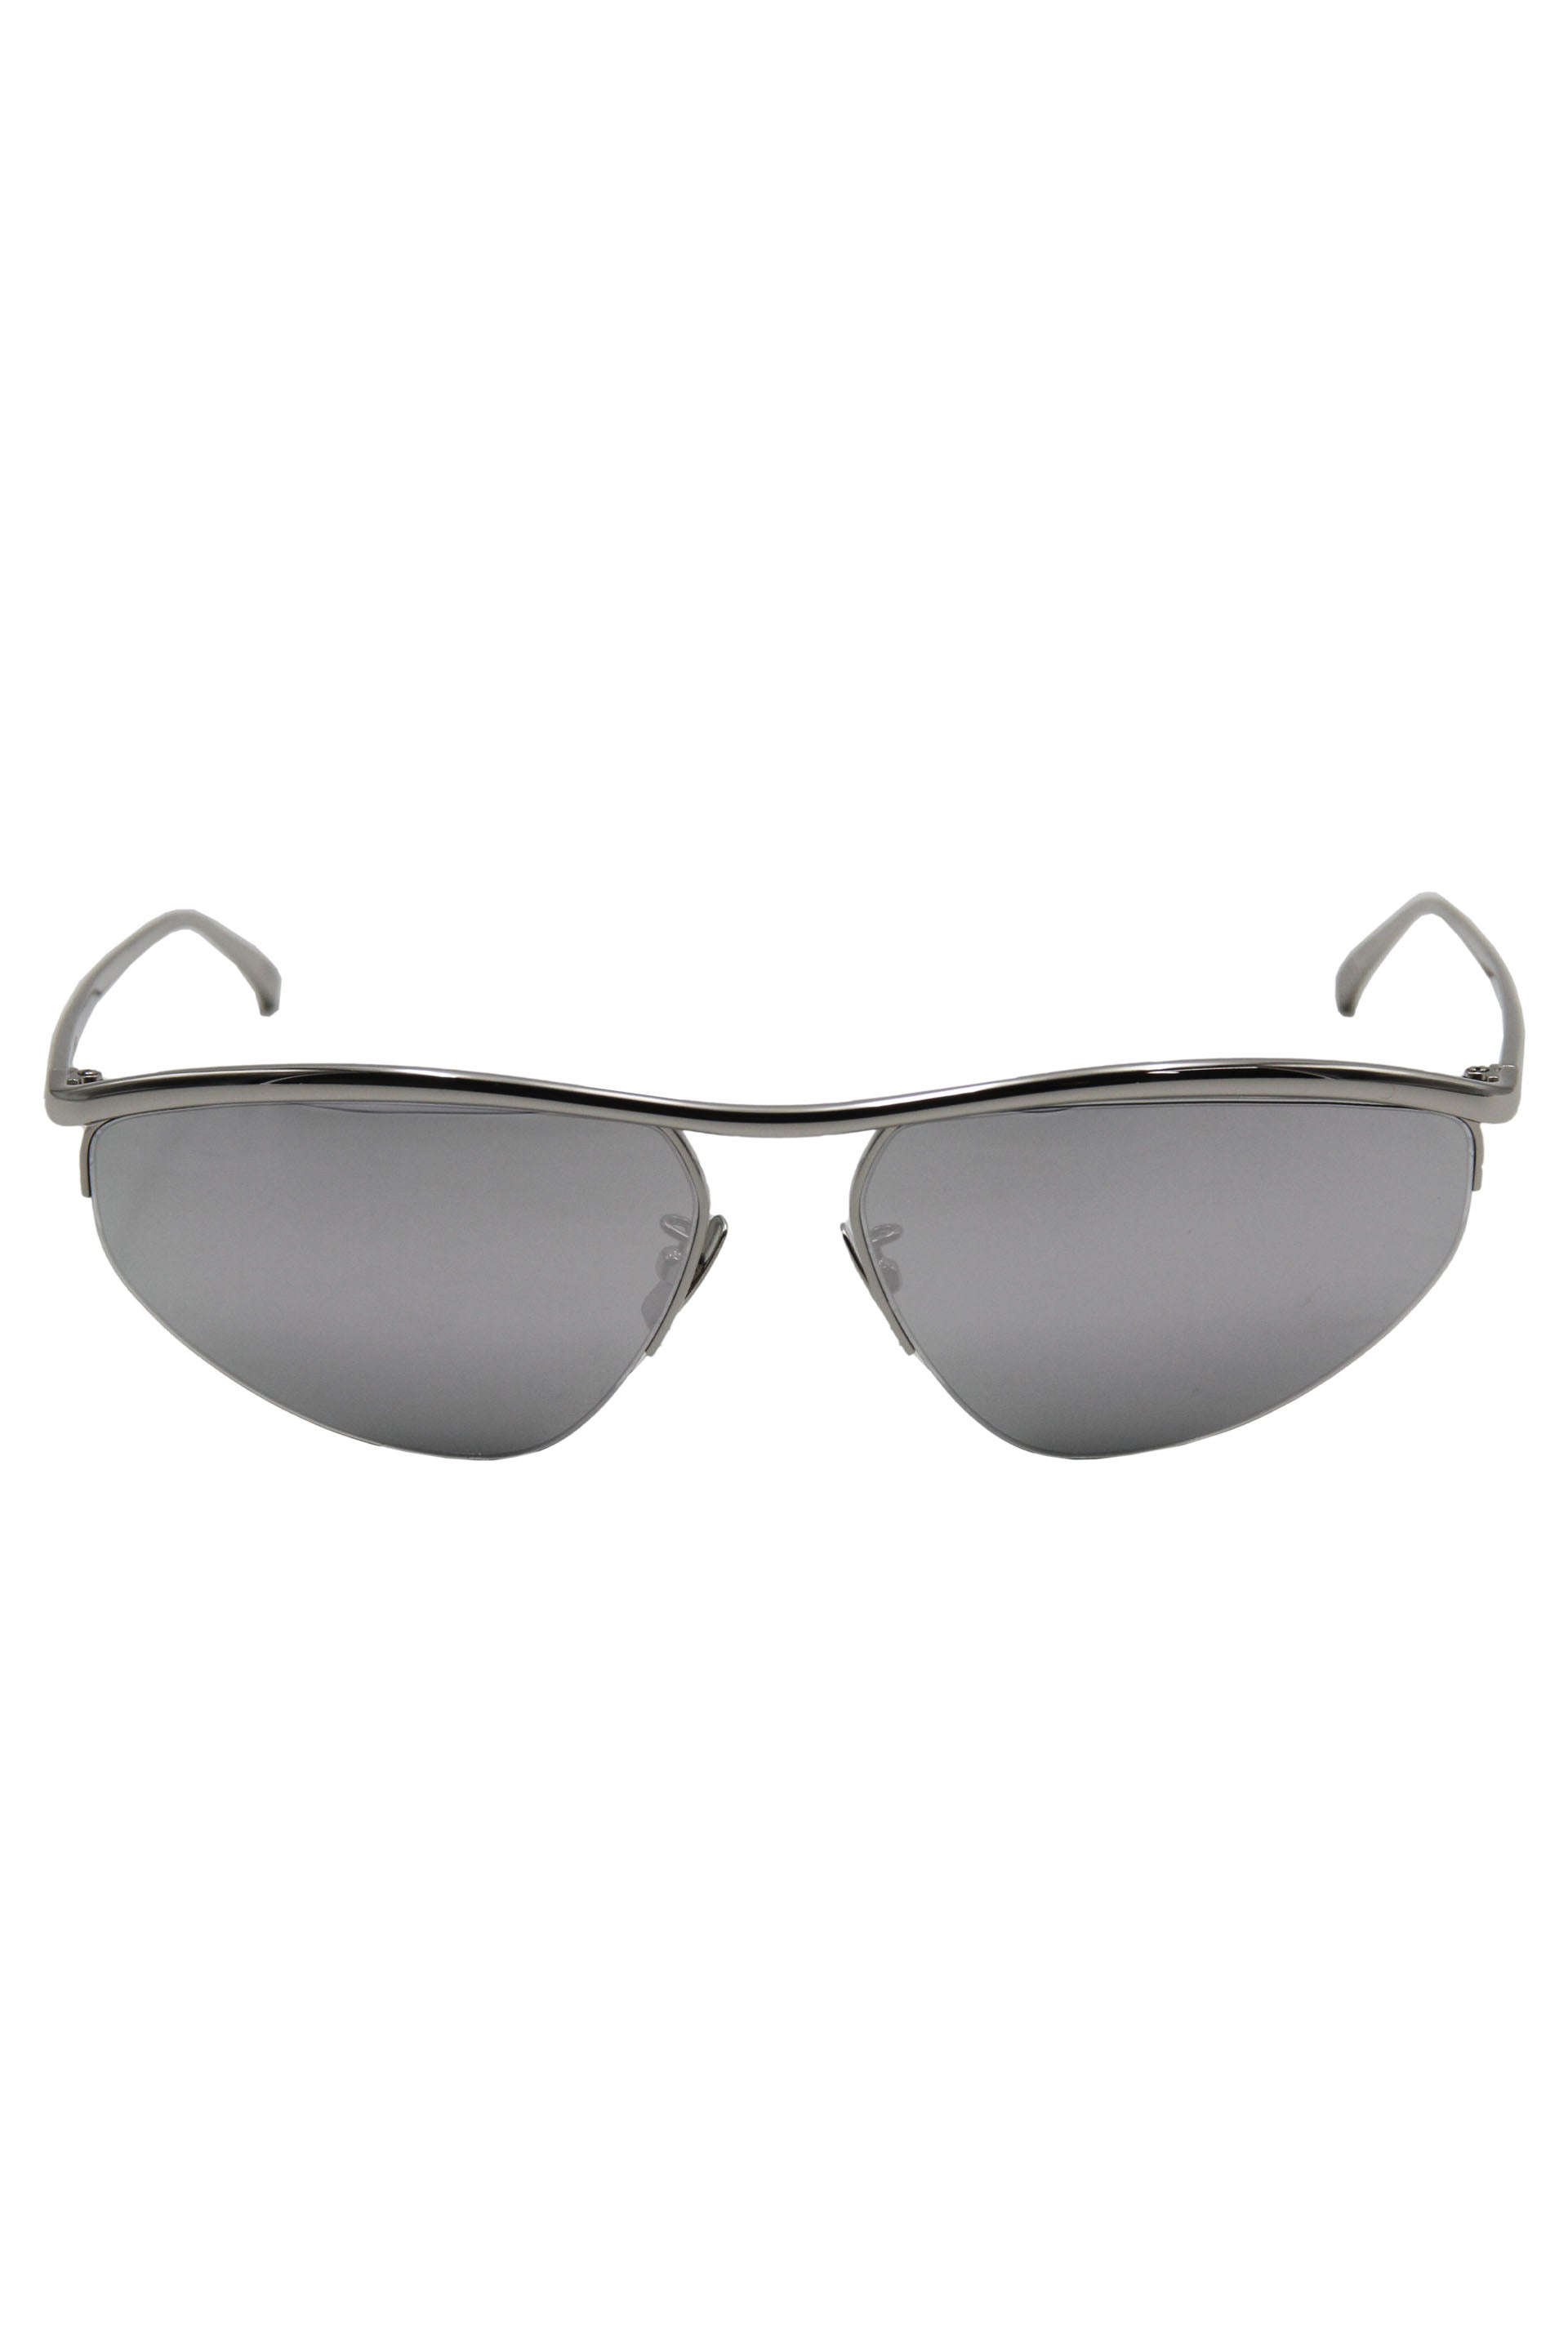 Half frame sunglasses-Accessoires-Bottega Veneta-OUTLET-SALE-TU-ARCHIVIST